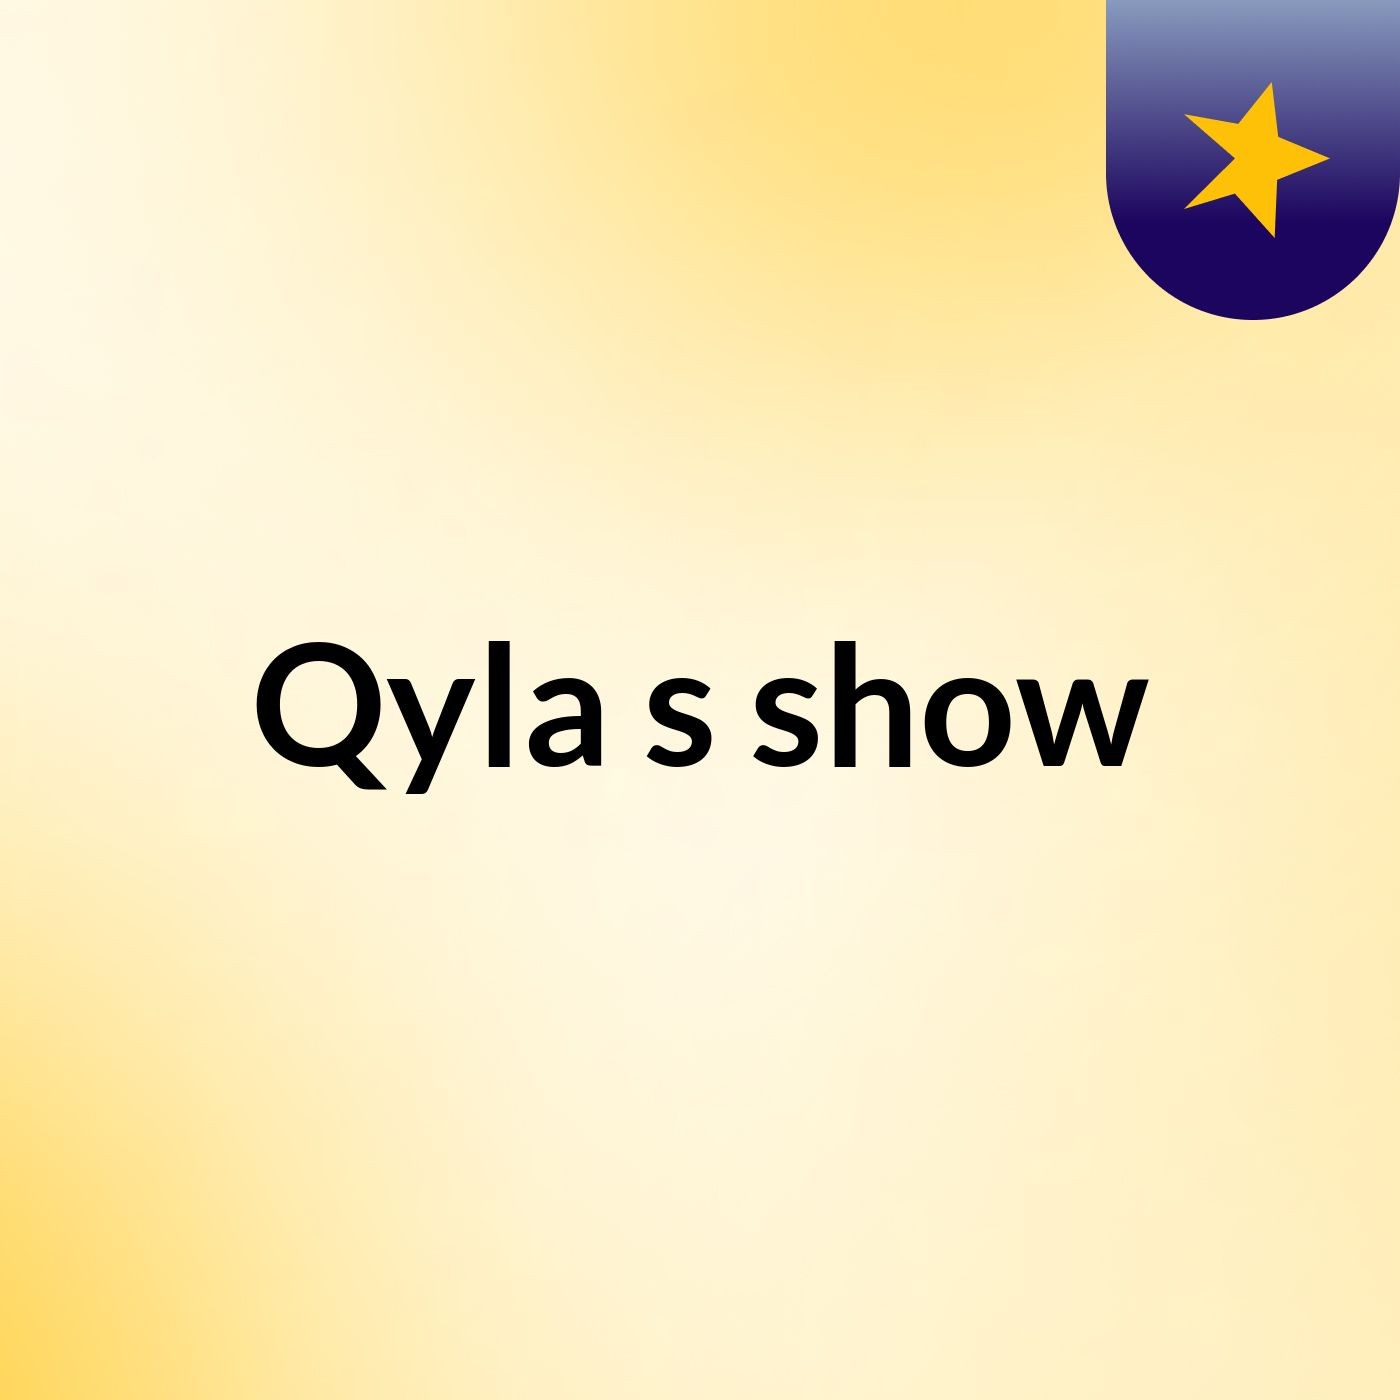 Qyla's show